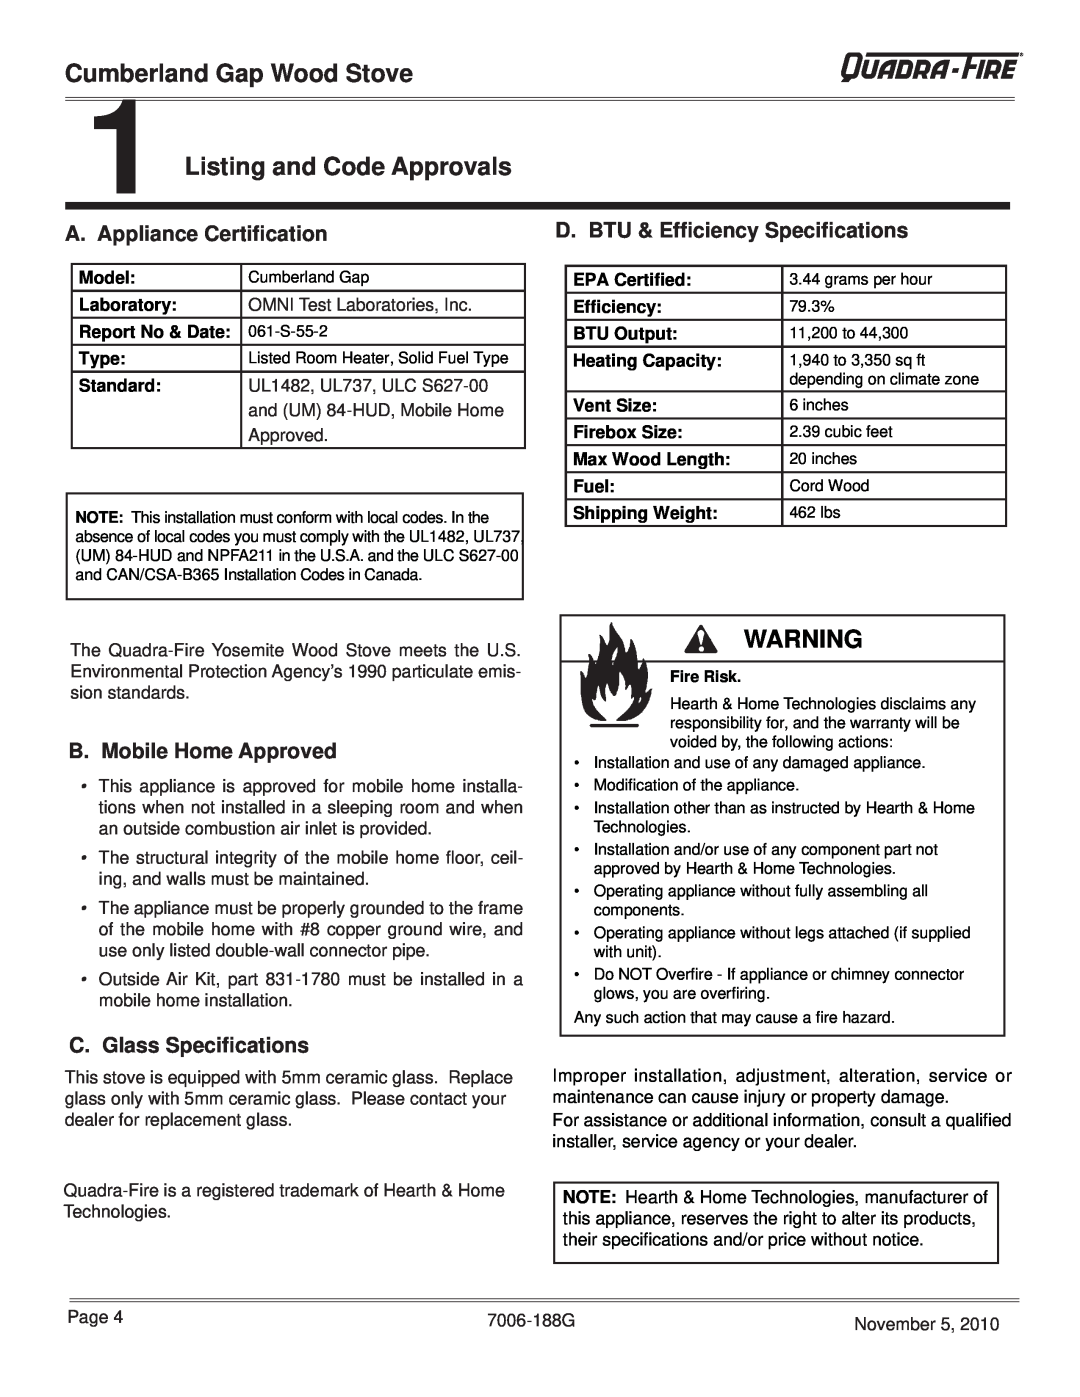 Quadra-Fire CUMPGAP-PMH Listing and Code Approvals, A. Appliance Certiﬁcation, D. BTU & Efﬁciency Speciﬁcations, Model 